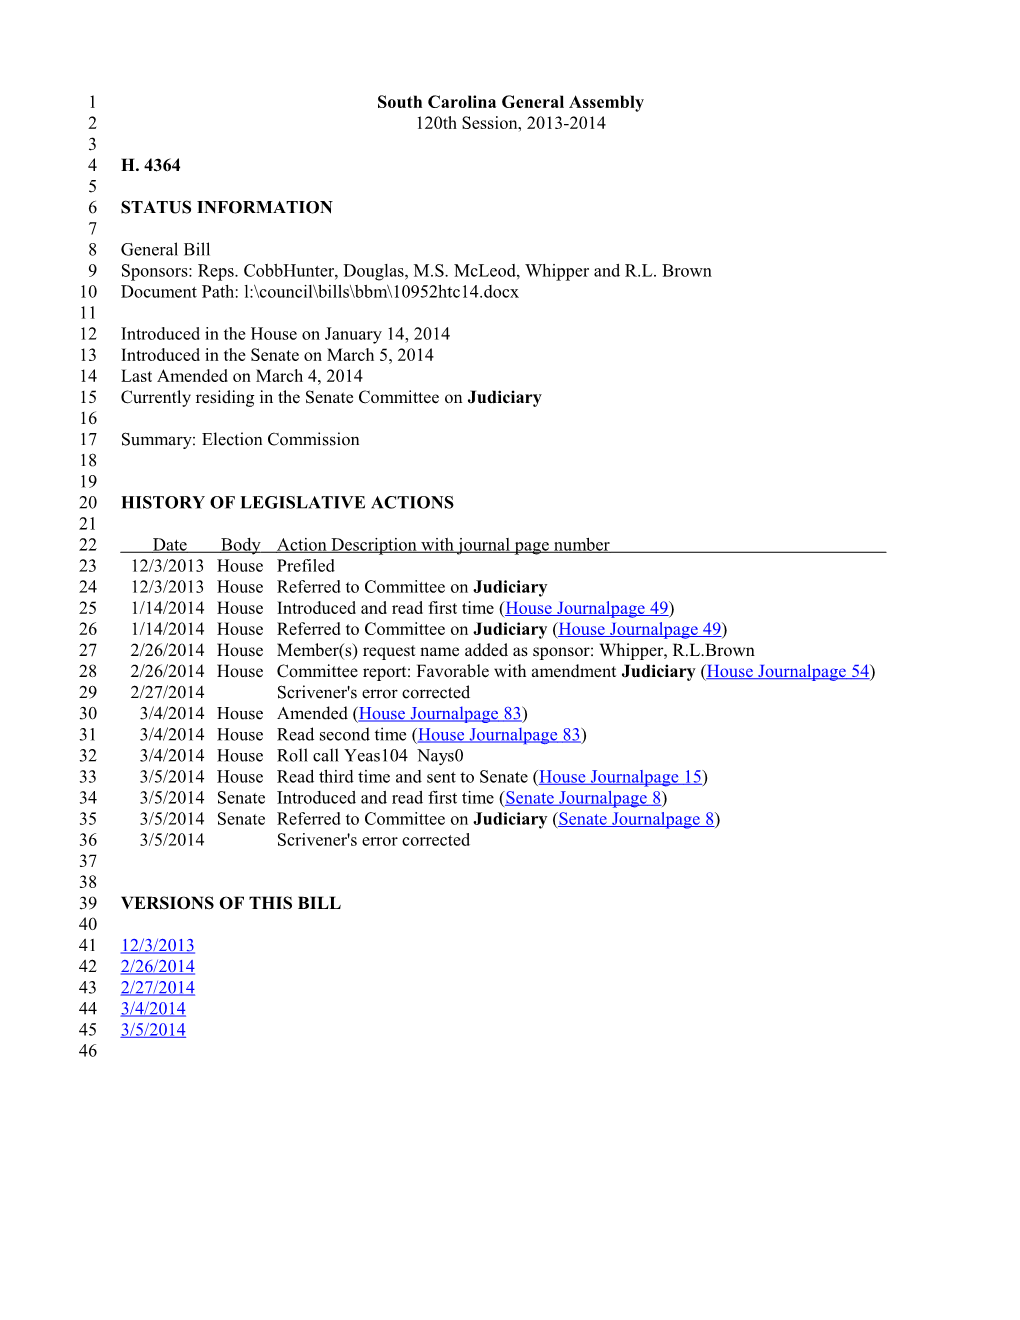 2013-2014 Bill 4364: Election Commission - South Carolina Legislature Online